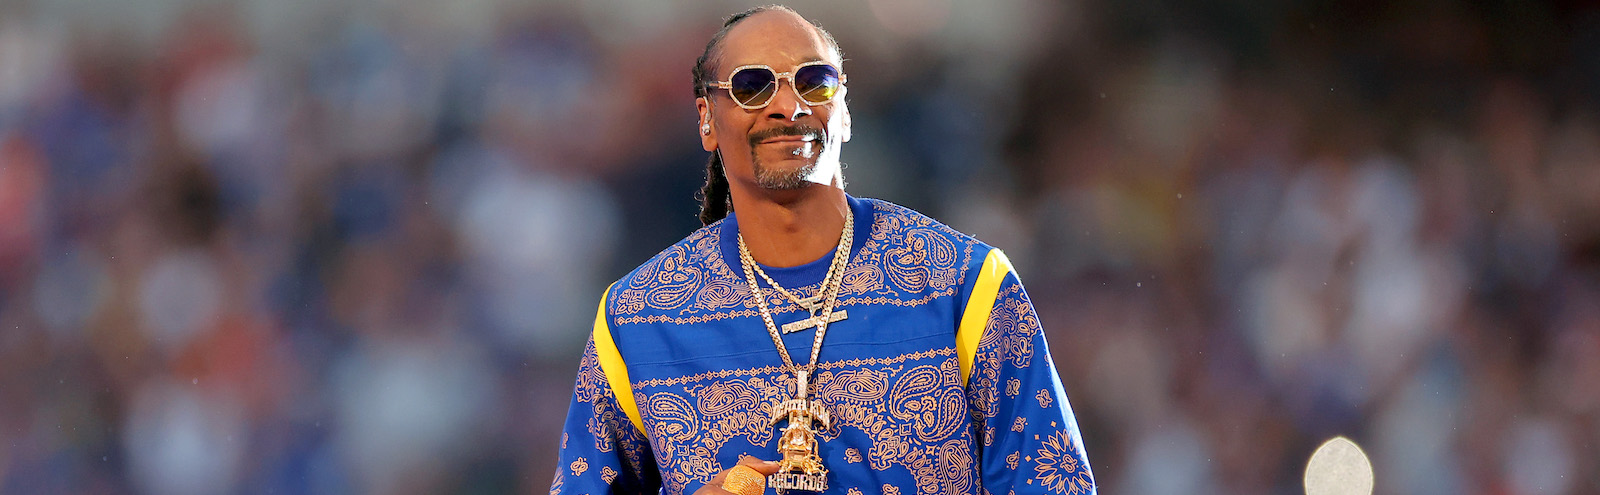 Snoop Dogg 2022 Super Bowl Halftime